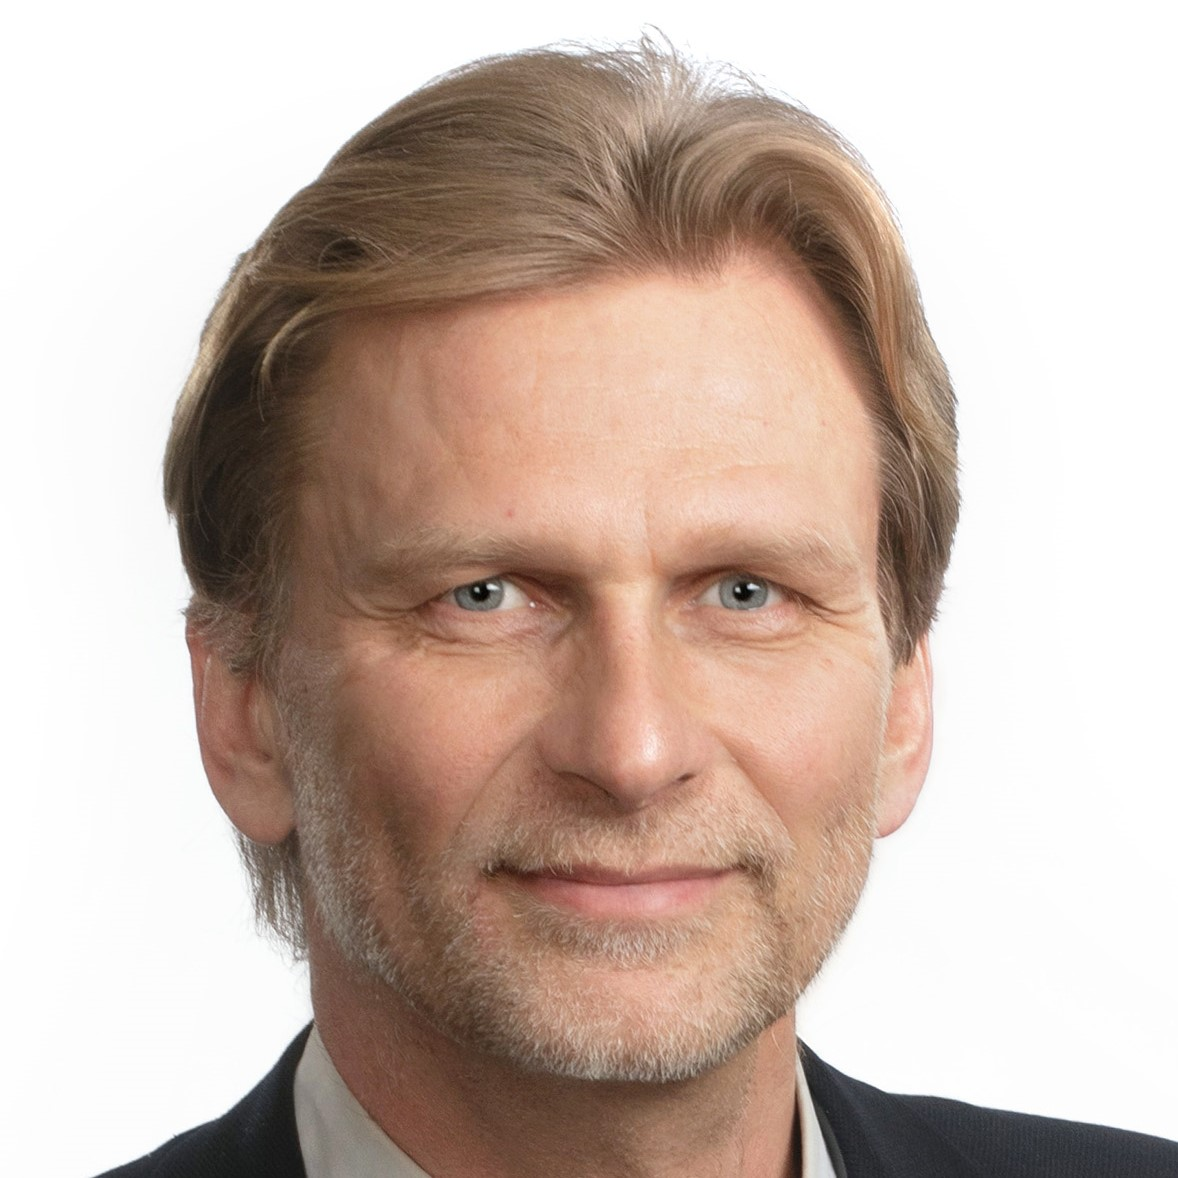 Sakari Hietanen, MD, PhD, an associate professor, and chief of the Department of Obstetrics and Gynecology at Turku University Hospital, in Turku, Finland